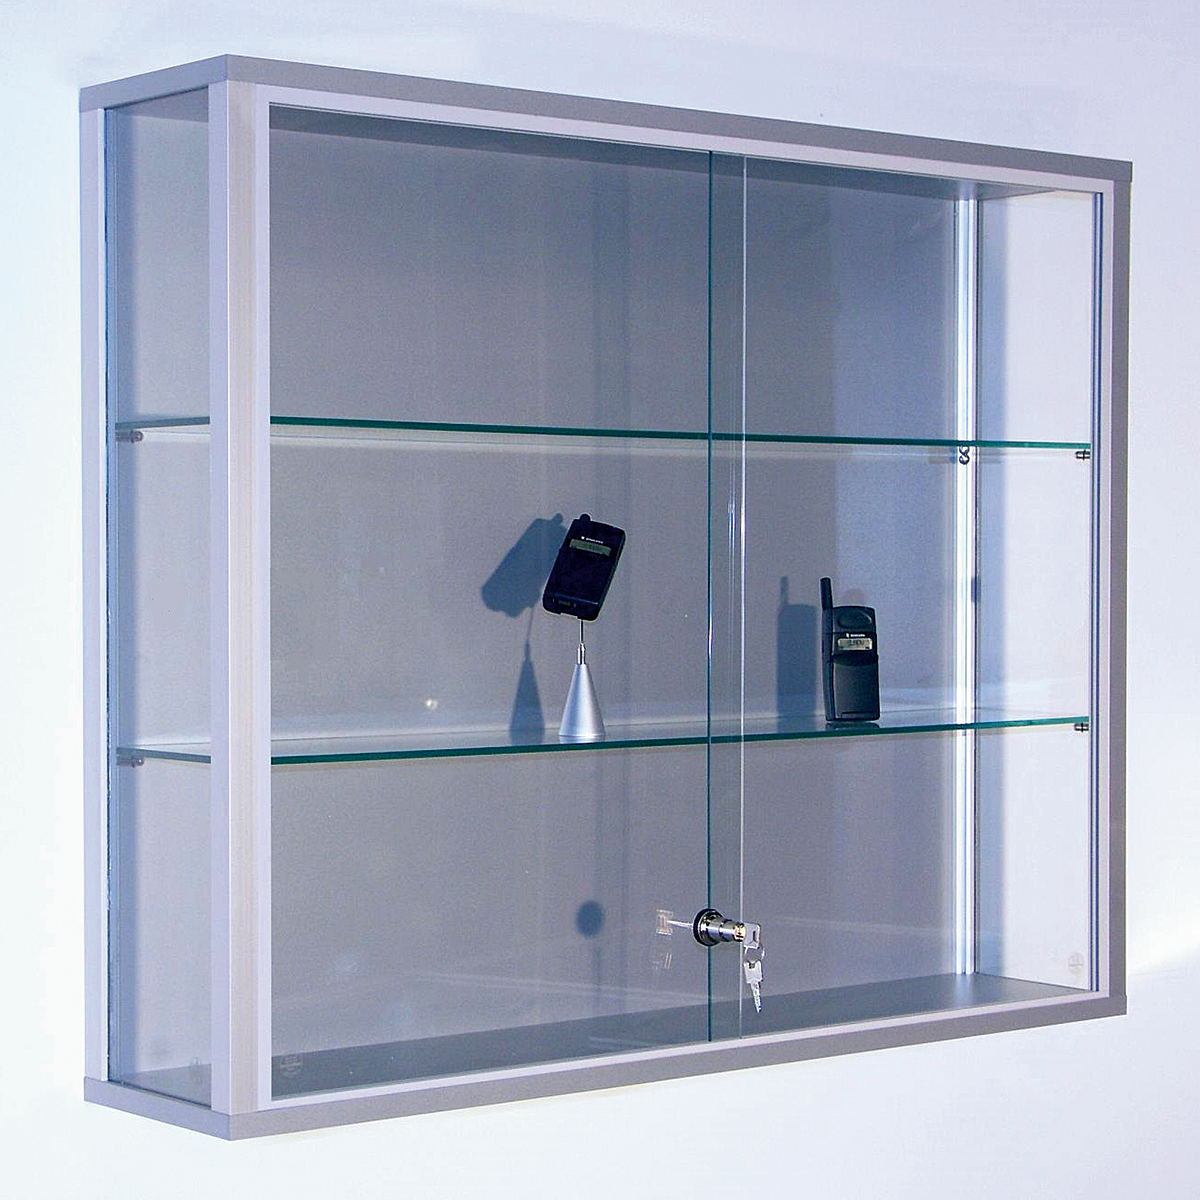 Витрина настенная ref.45 IDC. SS 603 стеклянная витрина. Витрина Glass Showcase. Шкаф витрина алюминий стекло 800мм 2000. Шкаф витрина навесной